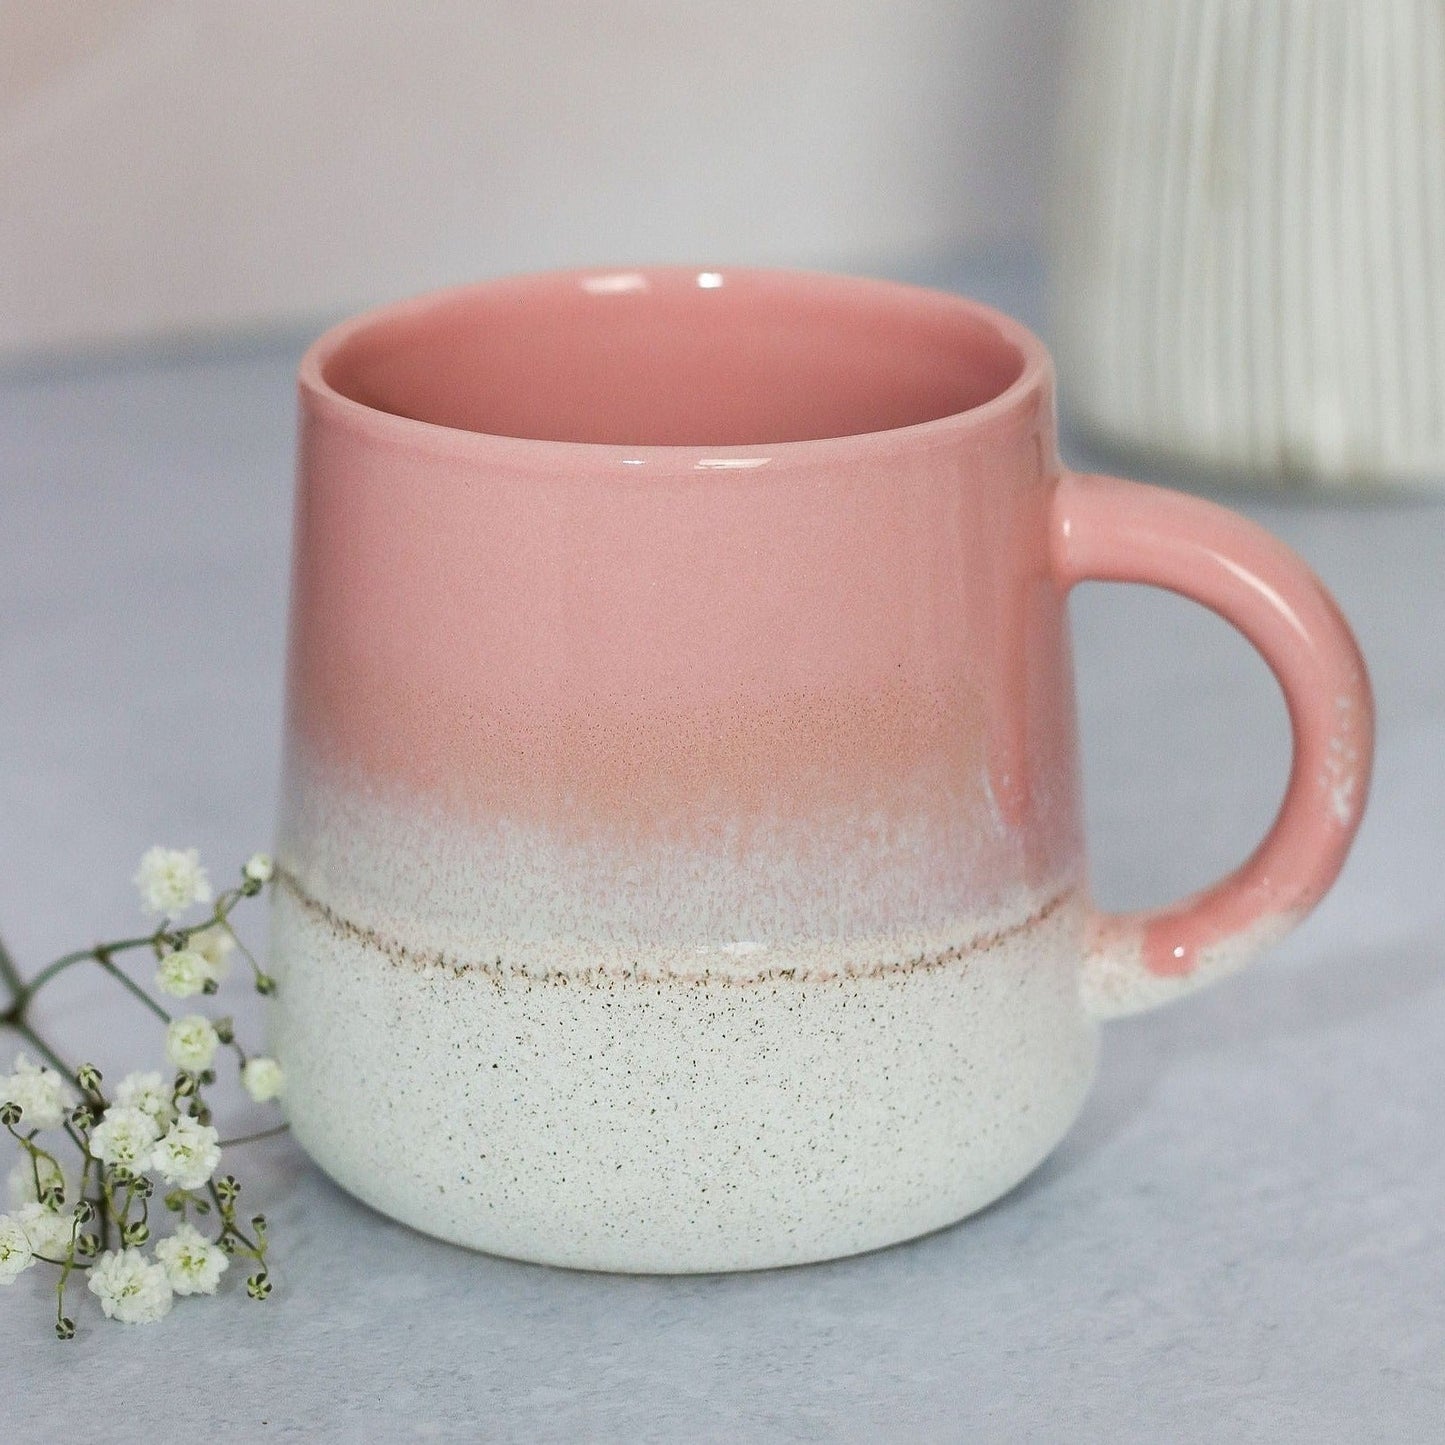 Pink mojave mug on grey background